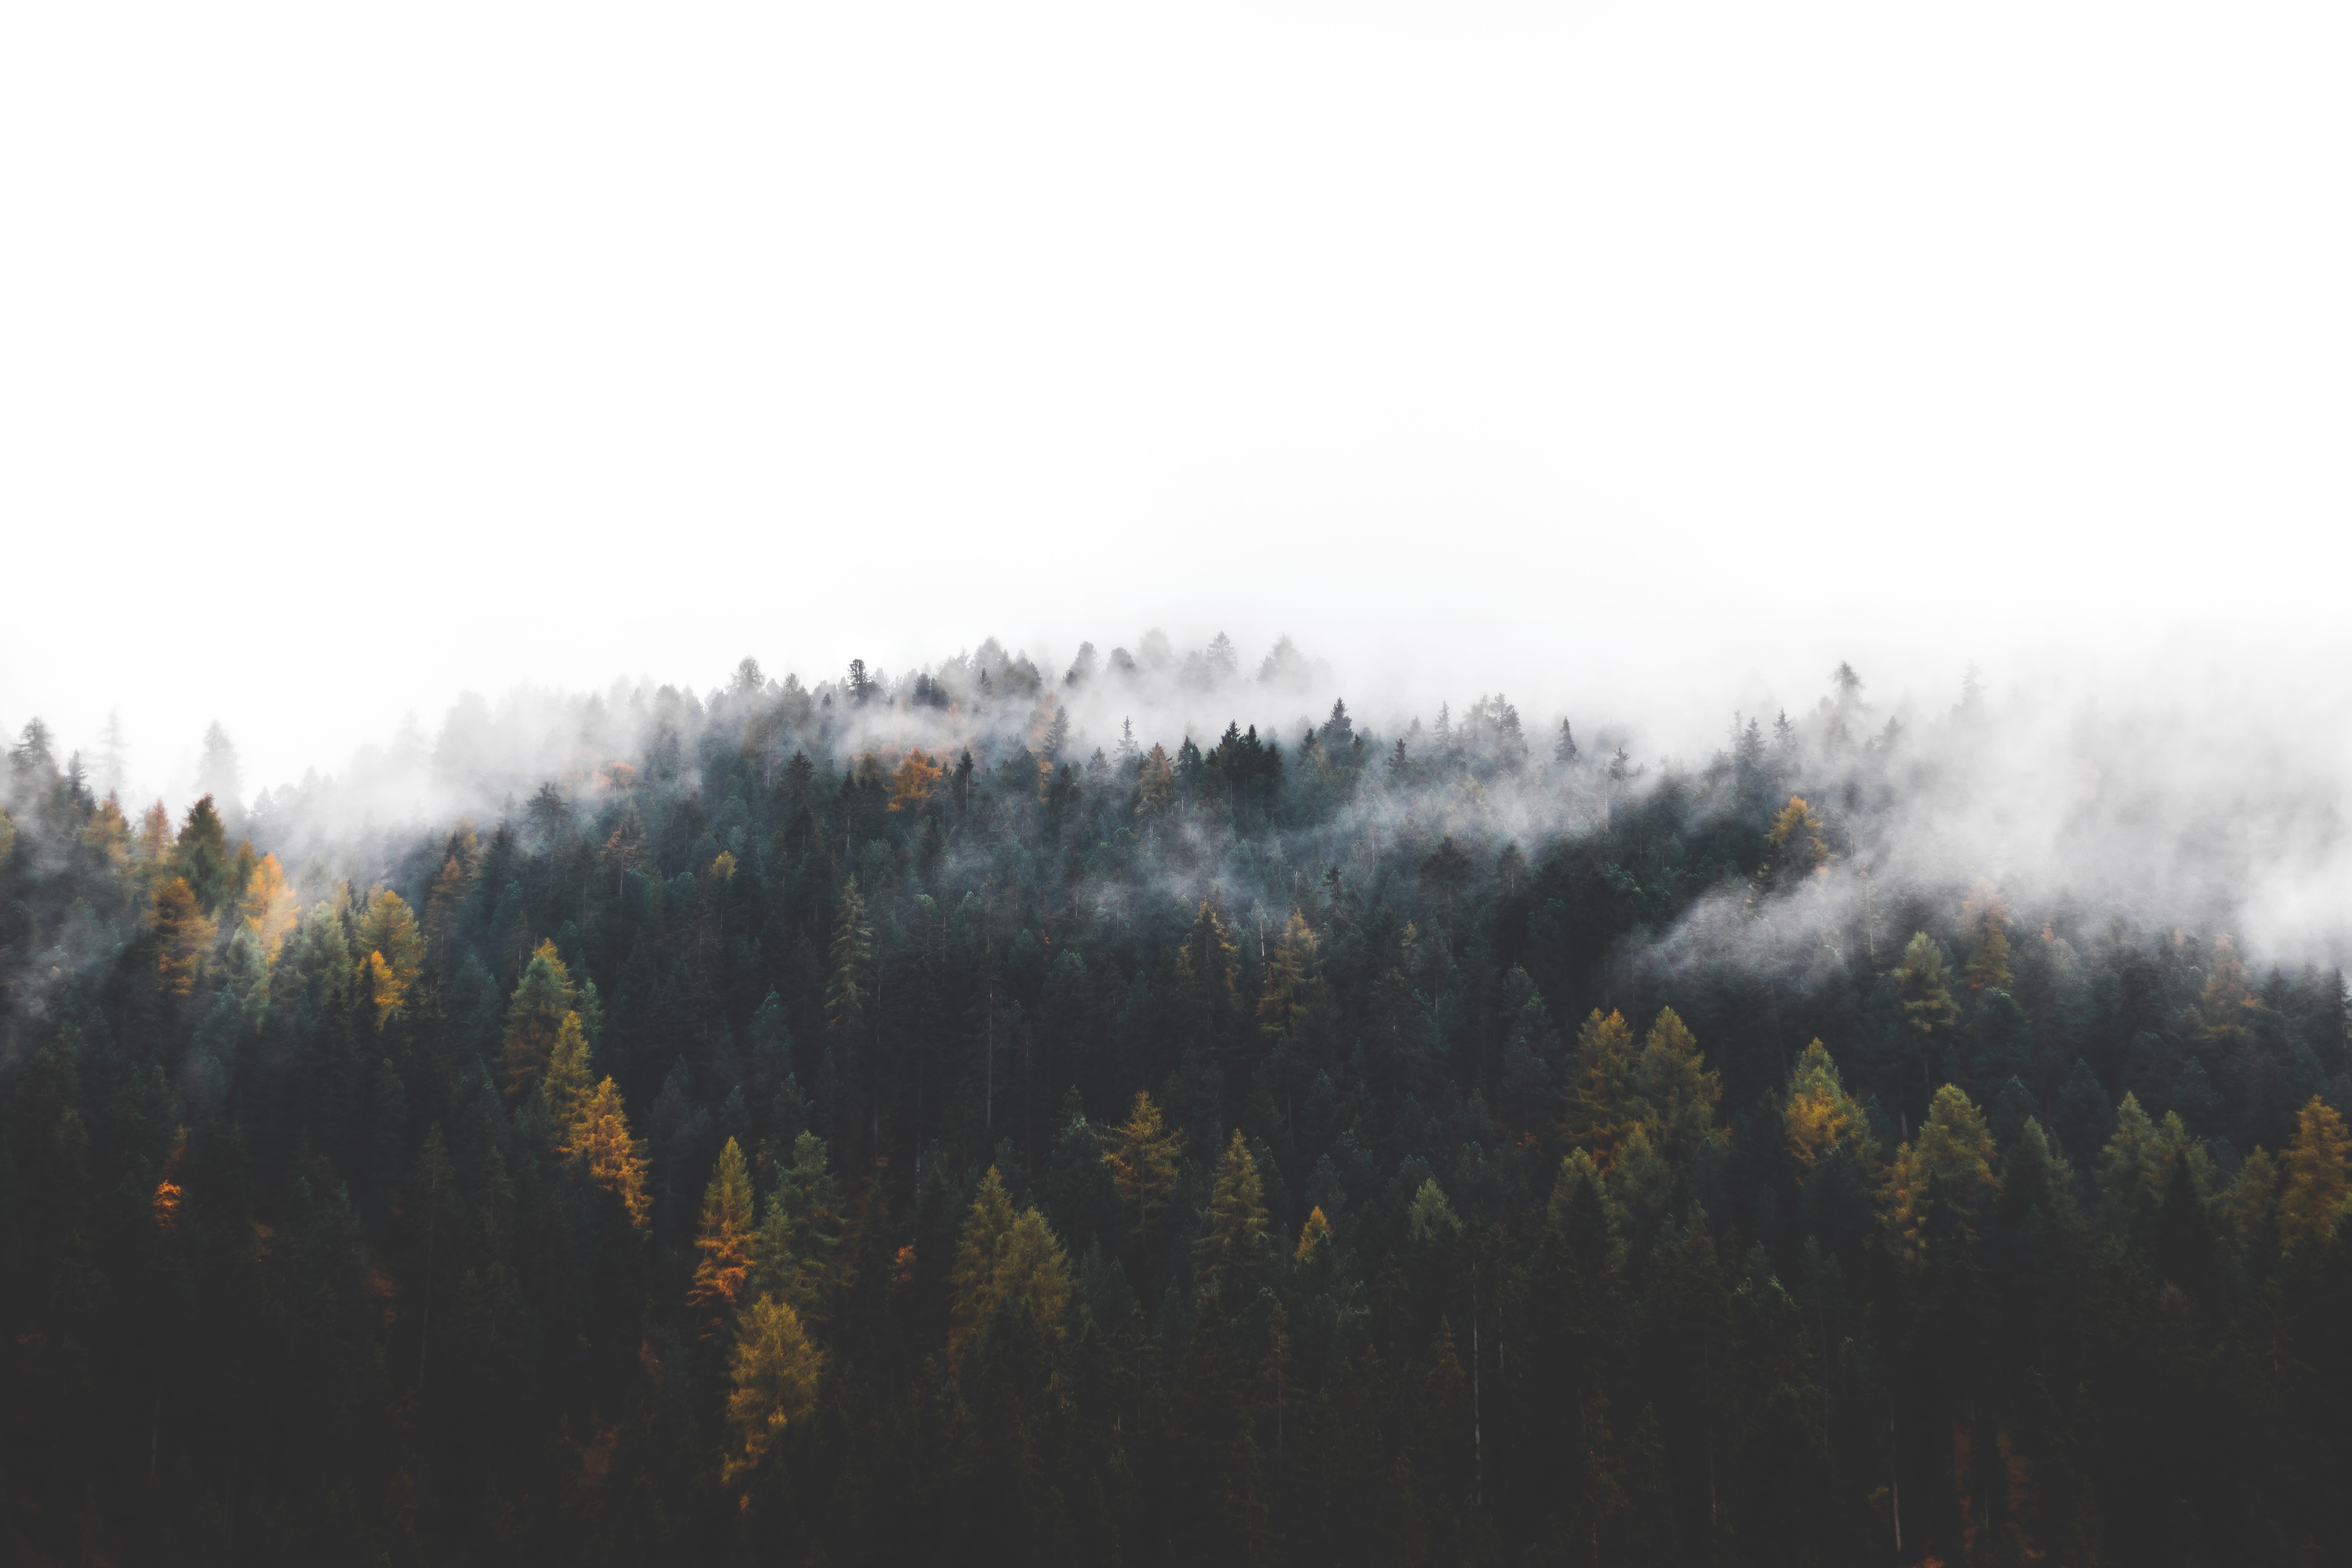 6000x4000 wallpaper, orange, tree, fall, woodland, wildlife, beauty, mist, PNG image, foggy, fog, dolomite, cloud, contrast, wood, nature, autumn, forest, landscape, dark, HD wallpaper